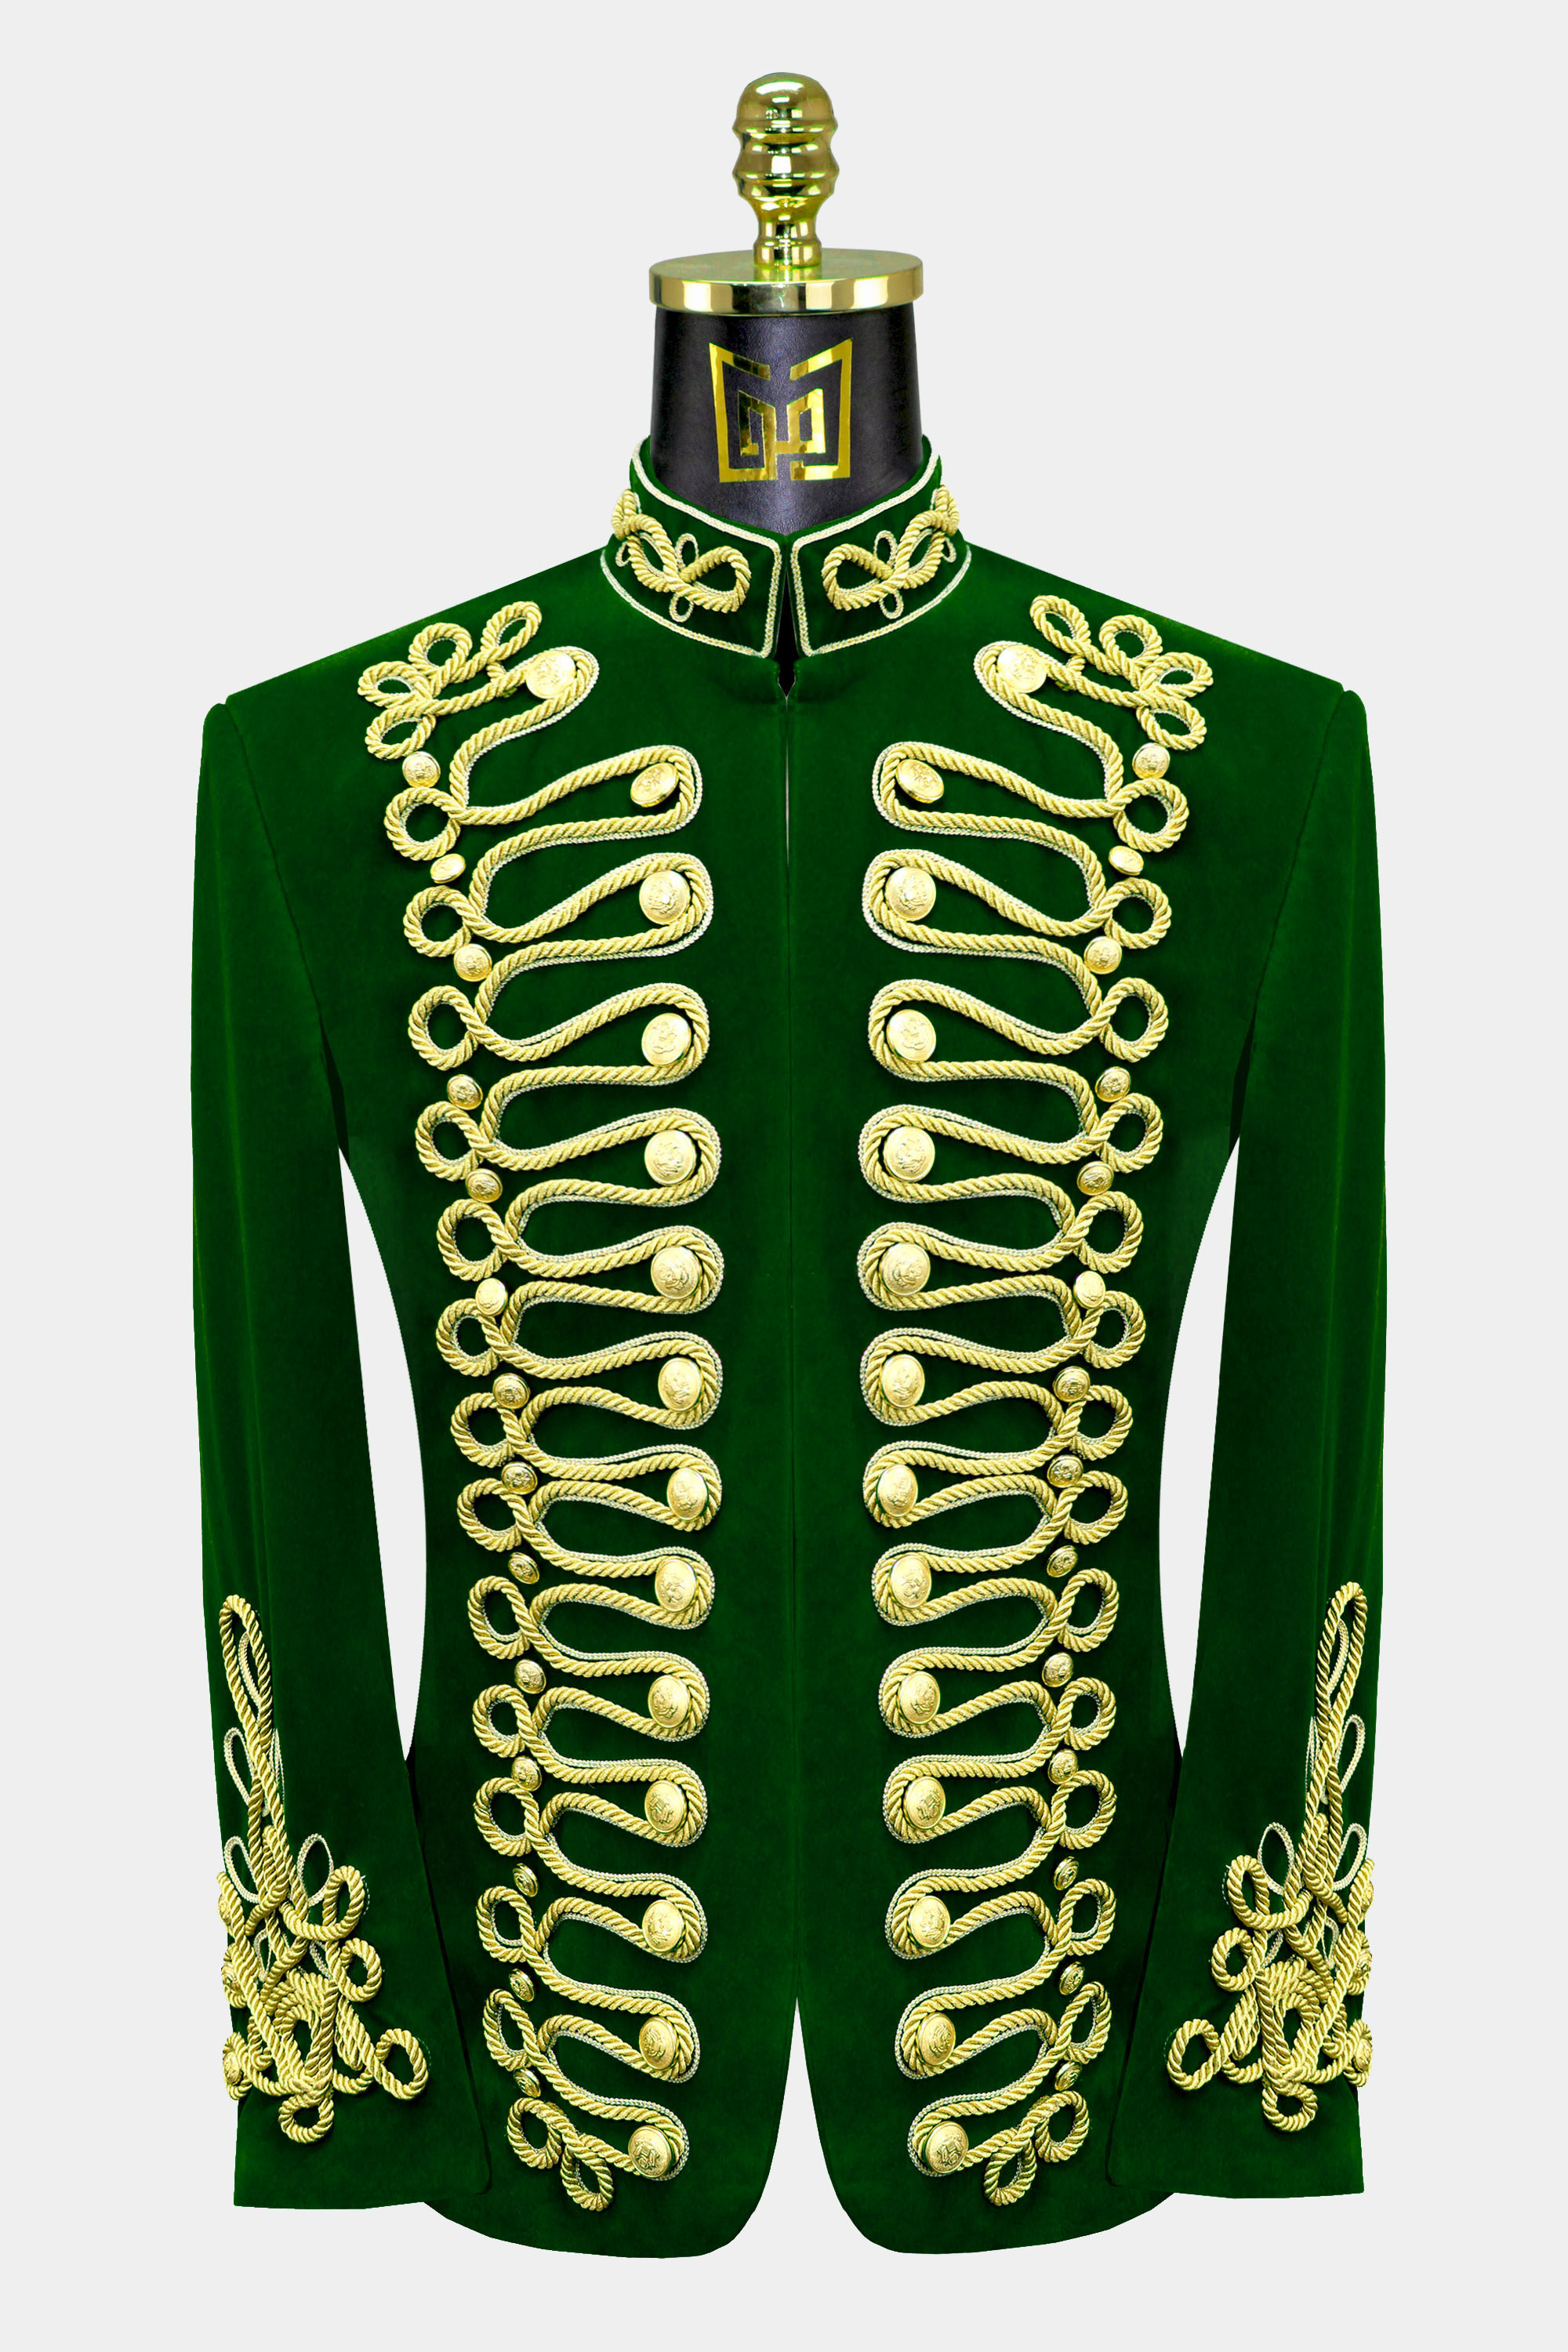 Mens-Emerald-Green-and-Gold-Mandarin-Collar-Jacket-Prom-Suit-Groom-Wedding-Blazer-from-Gentlemansguru.com